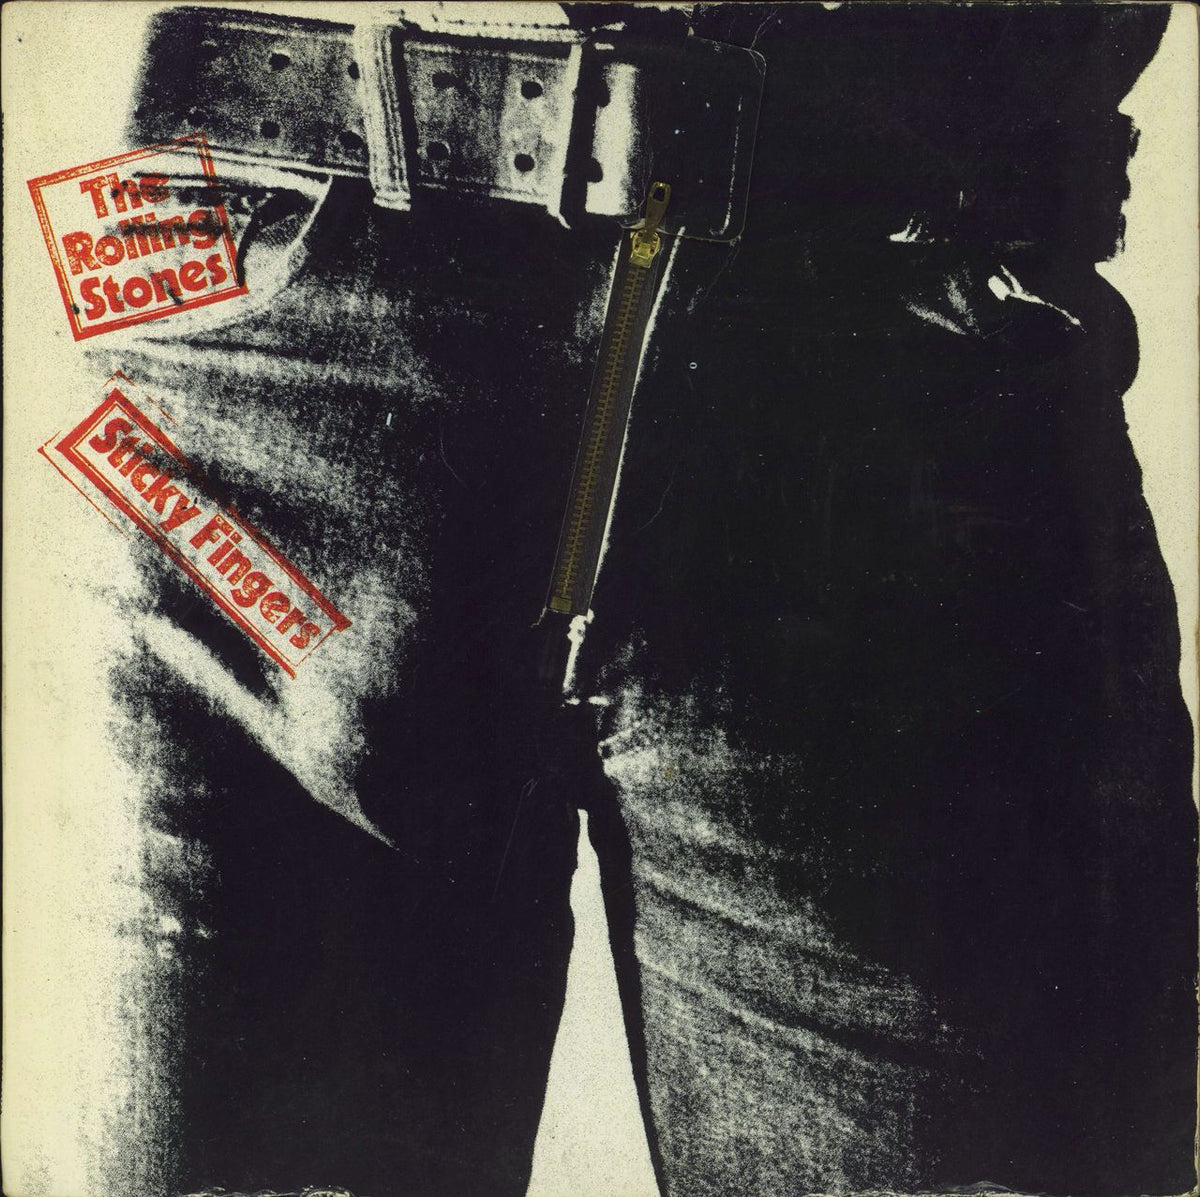 The Rolling Stones Sticky Fingers UK Vinyl LP — RareVinyl.com